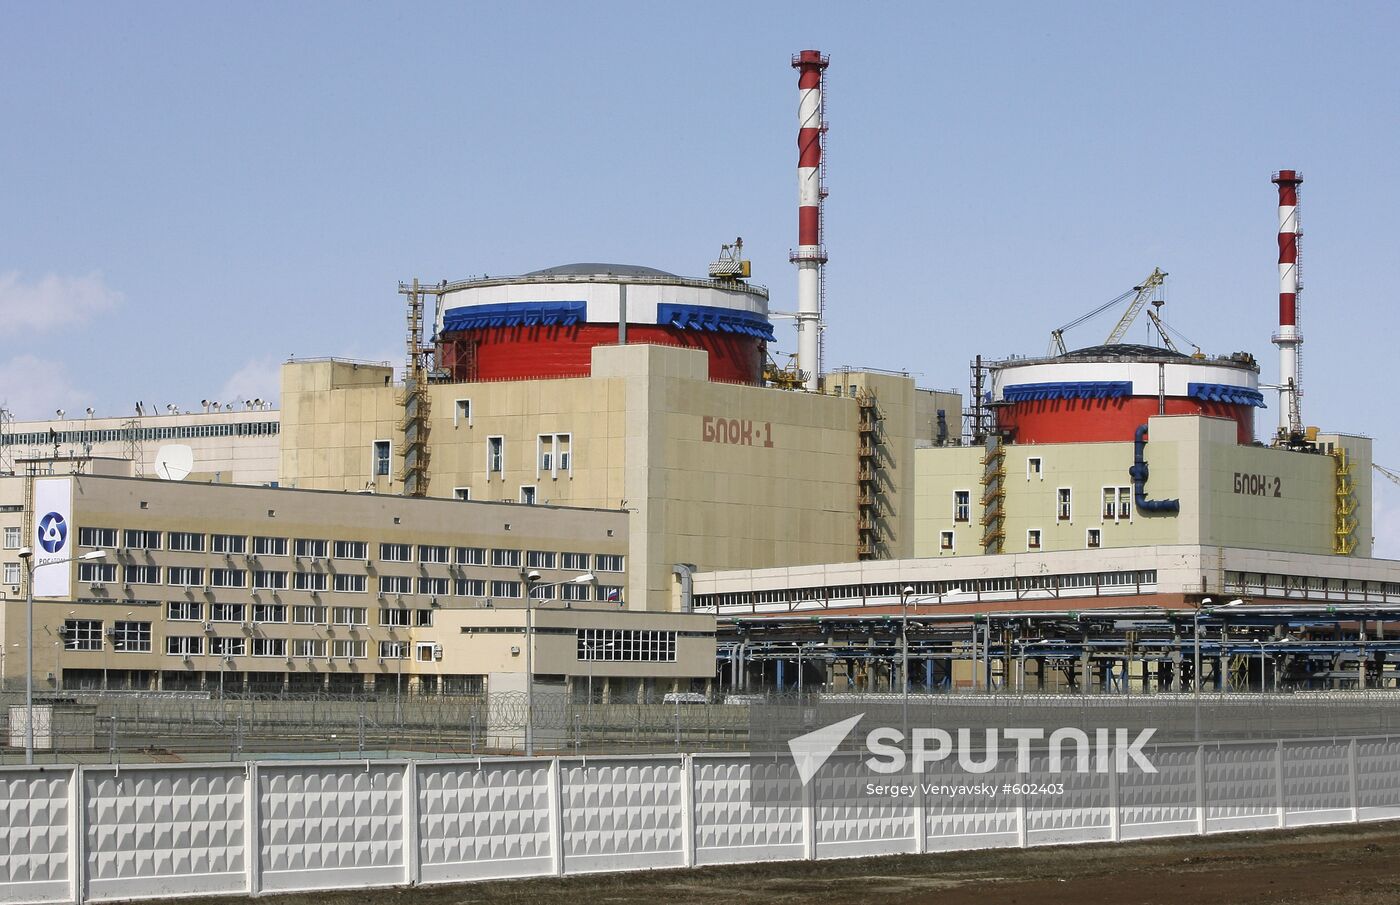 Volgodonsk Nuclear Power Plant